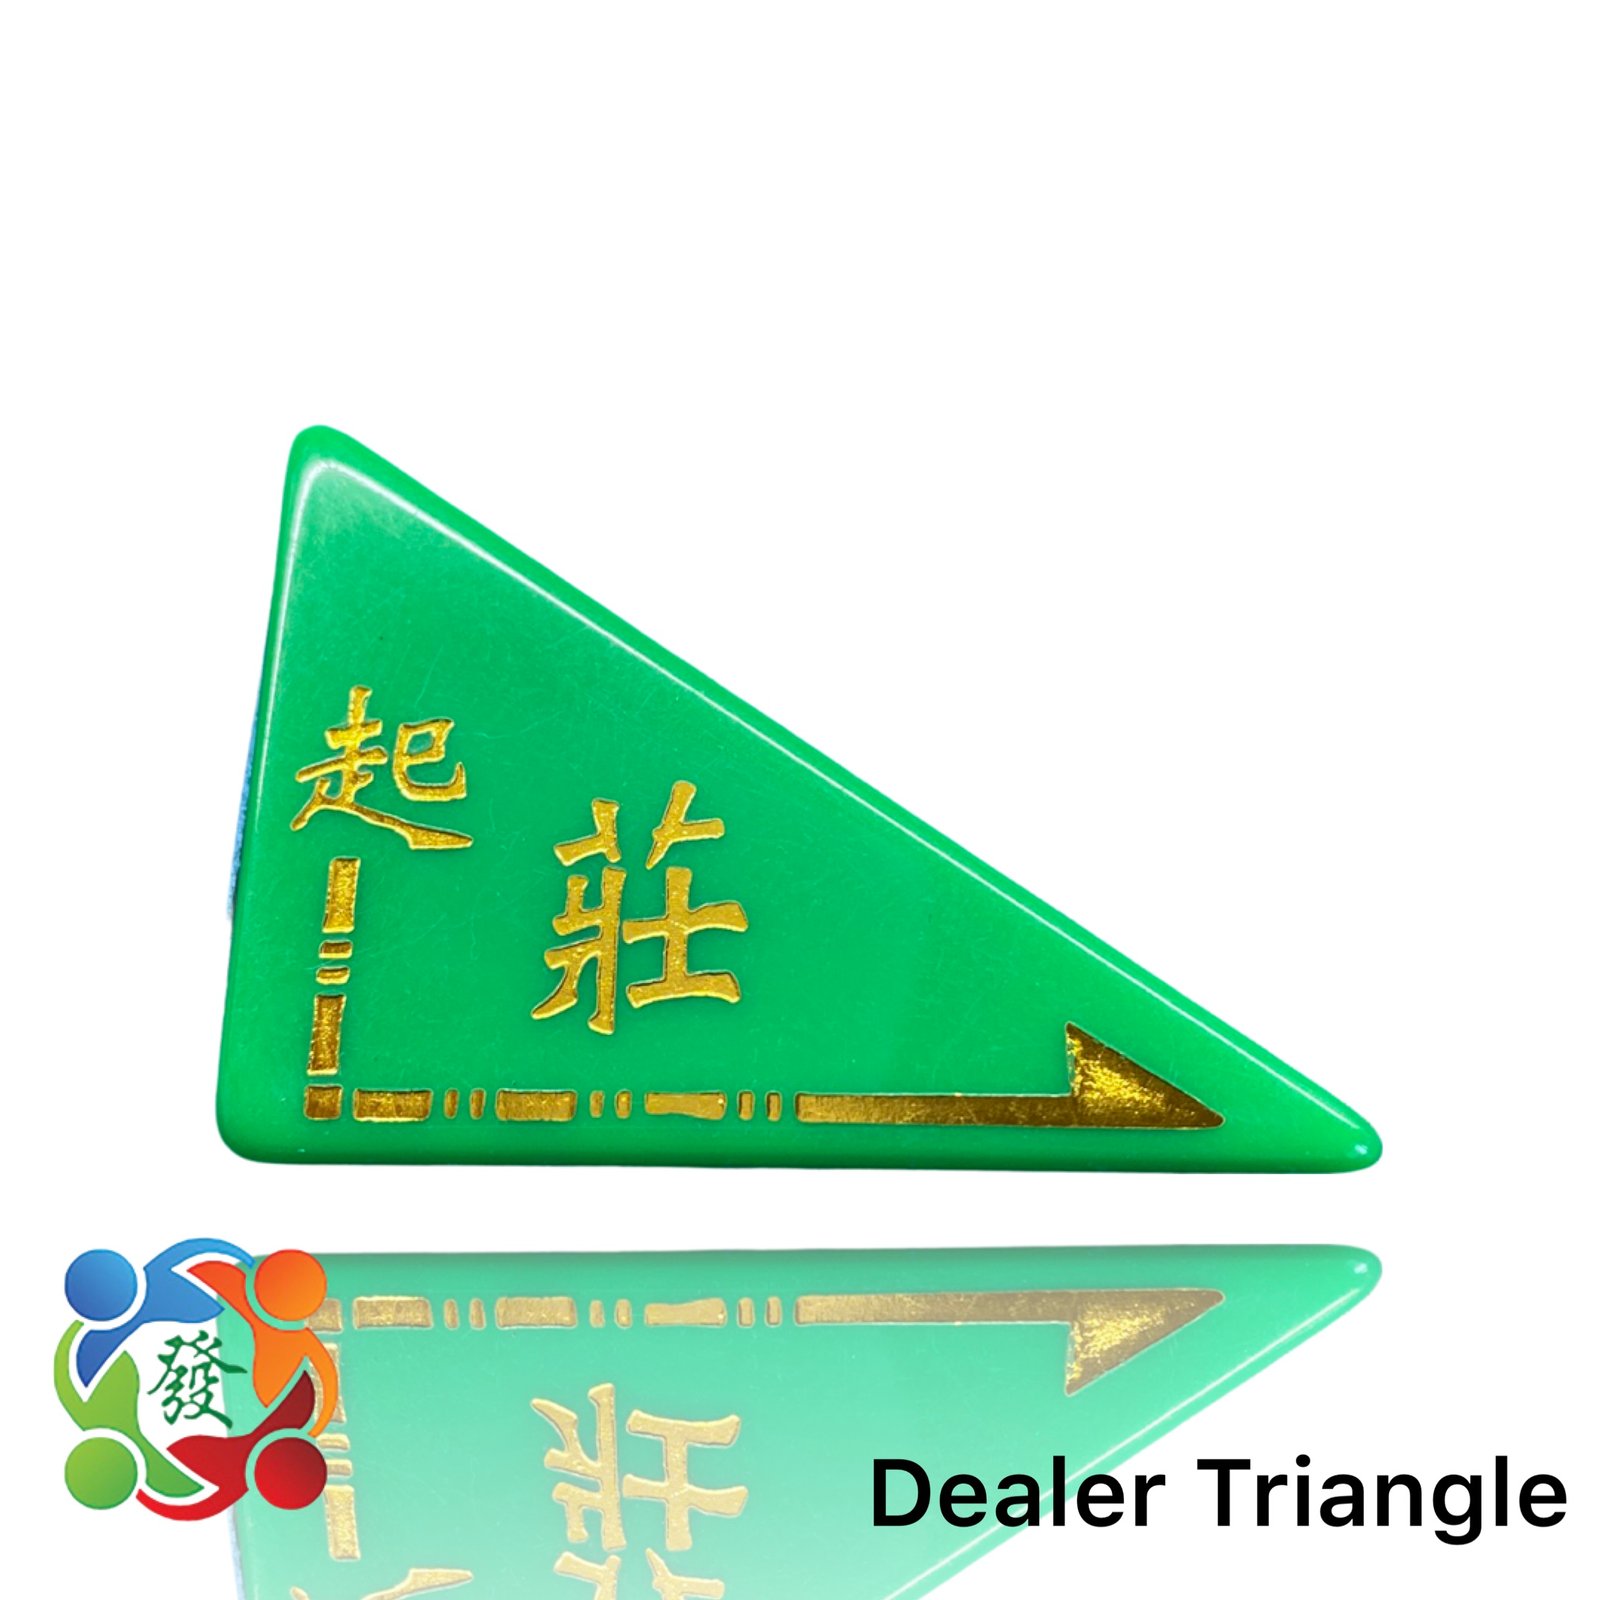 Dealer Triangle - Green